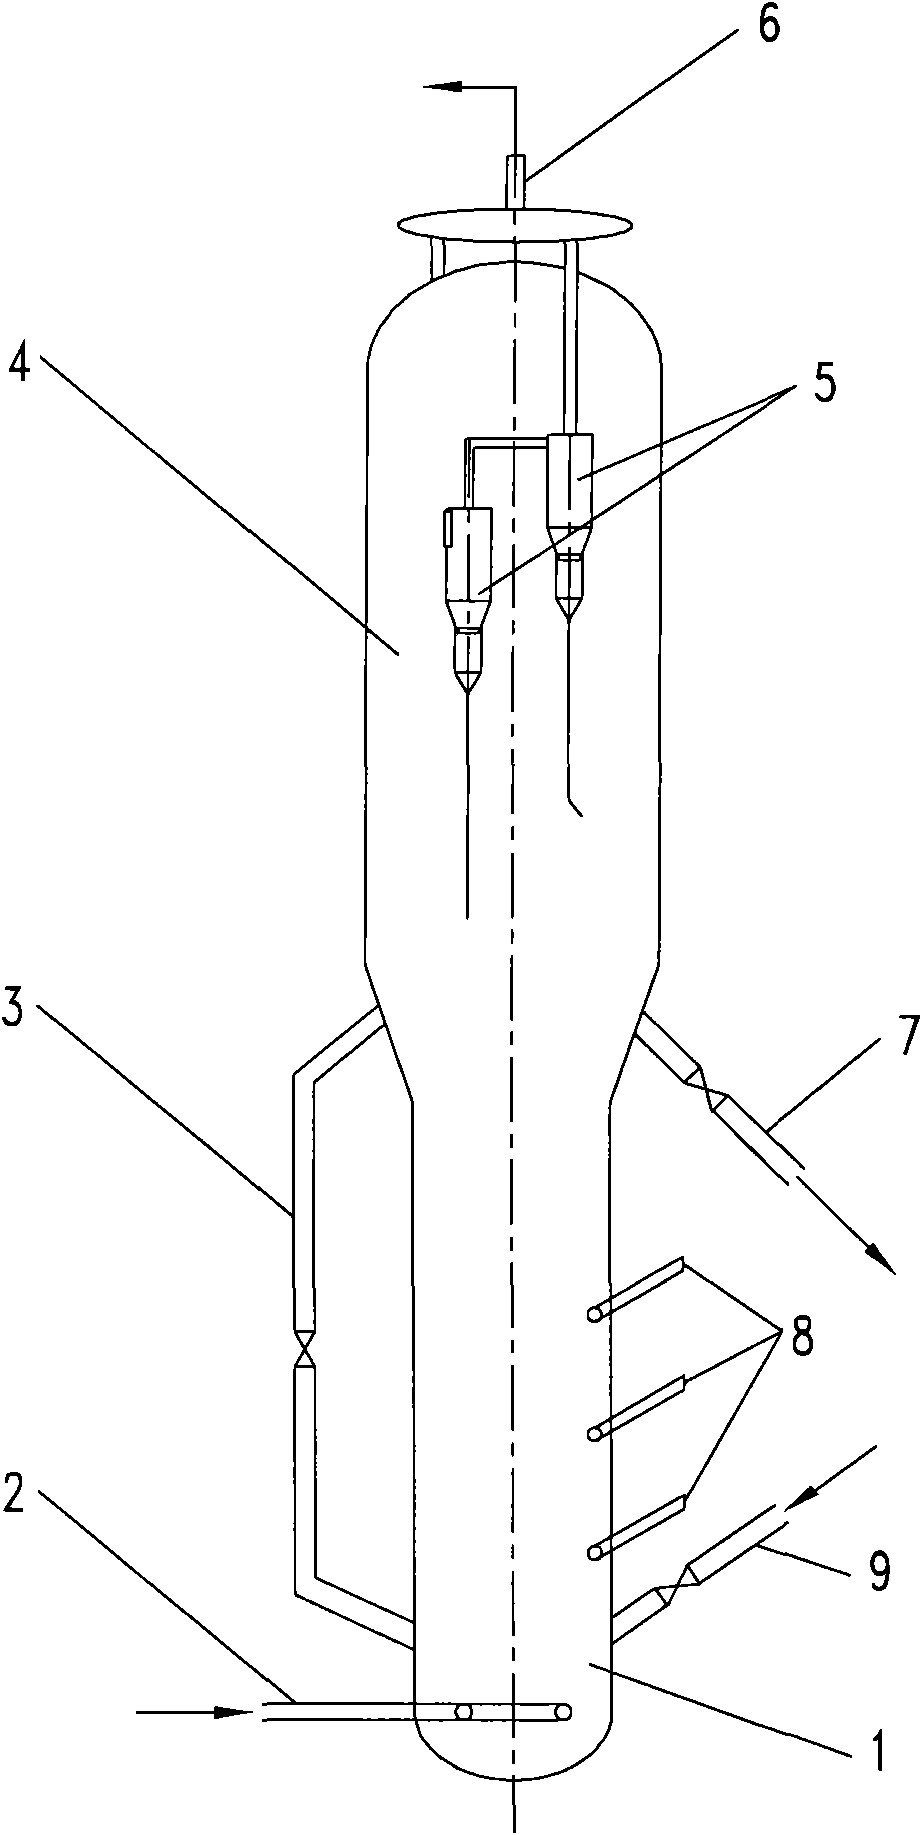 Method for preparing dimethylbenzene from oxygen-containing compound and methylbenzene